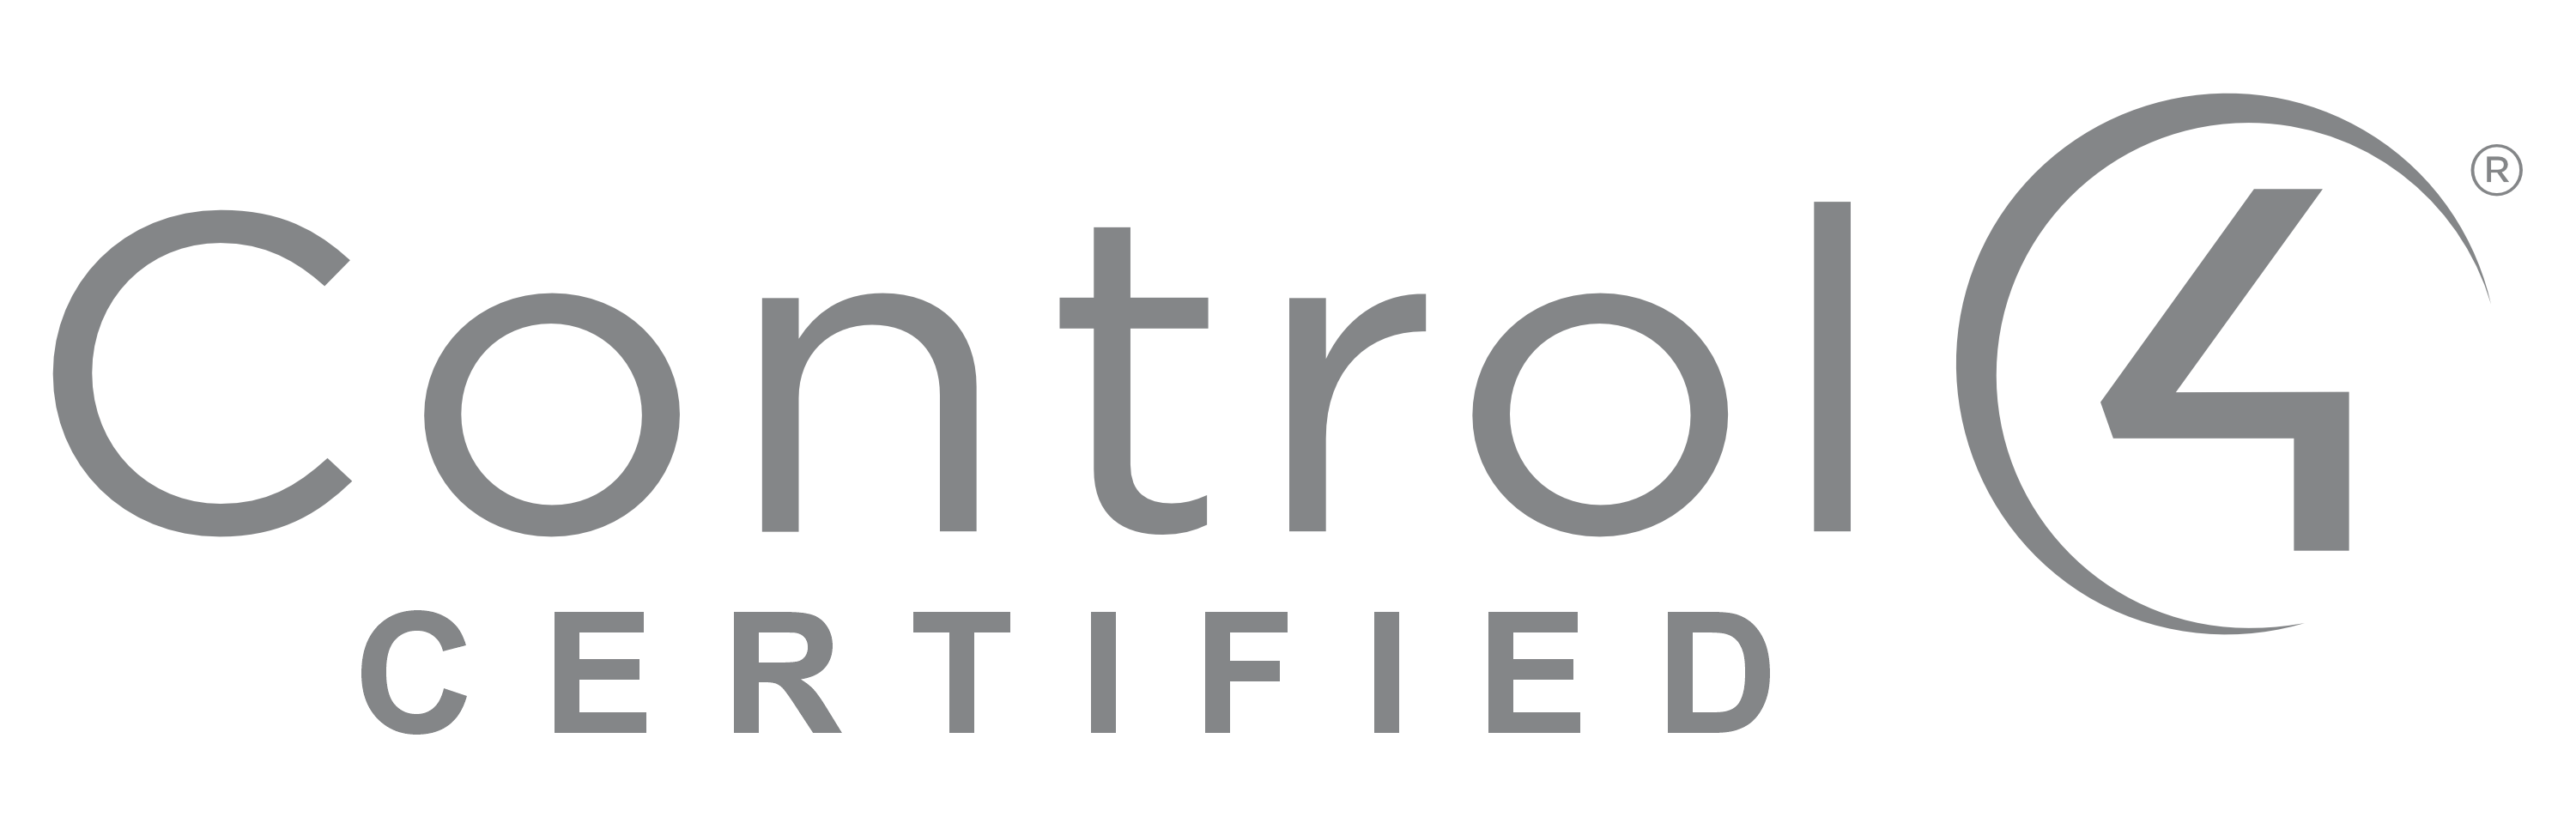 Logo control4 certified on LA SmartWire website